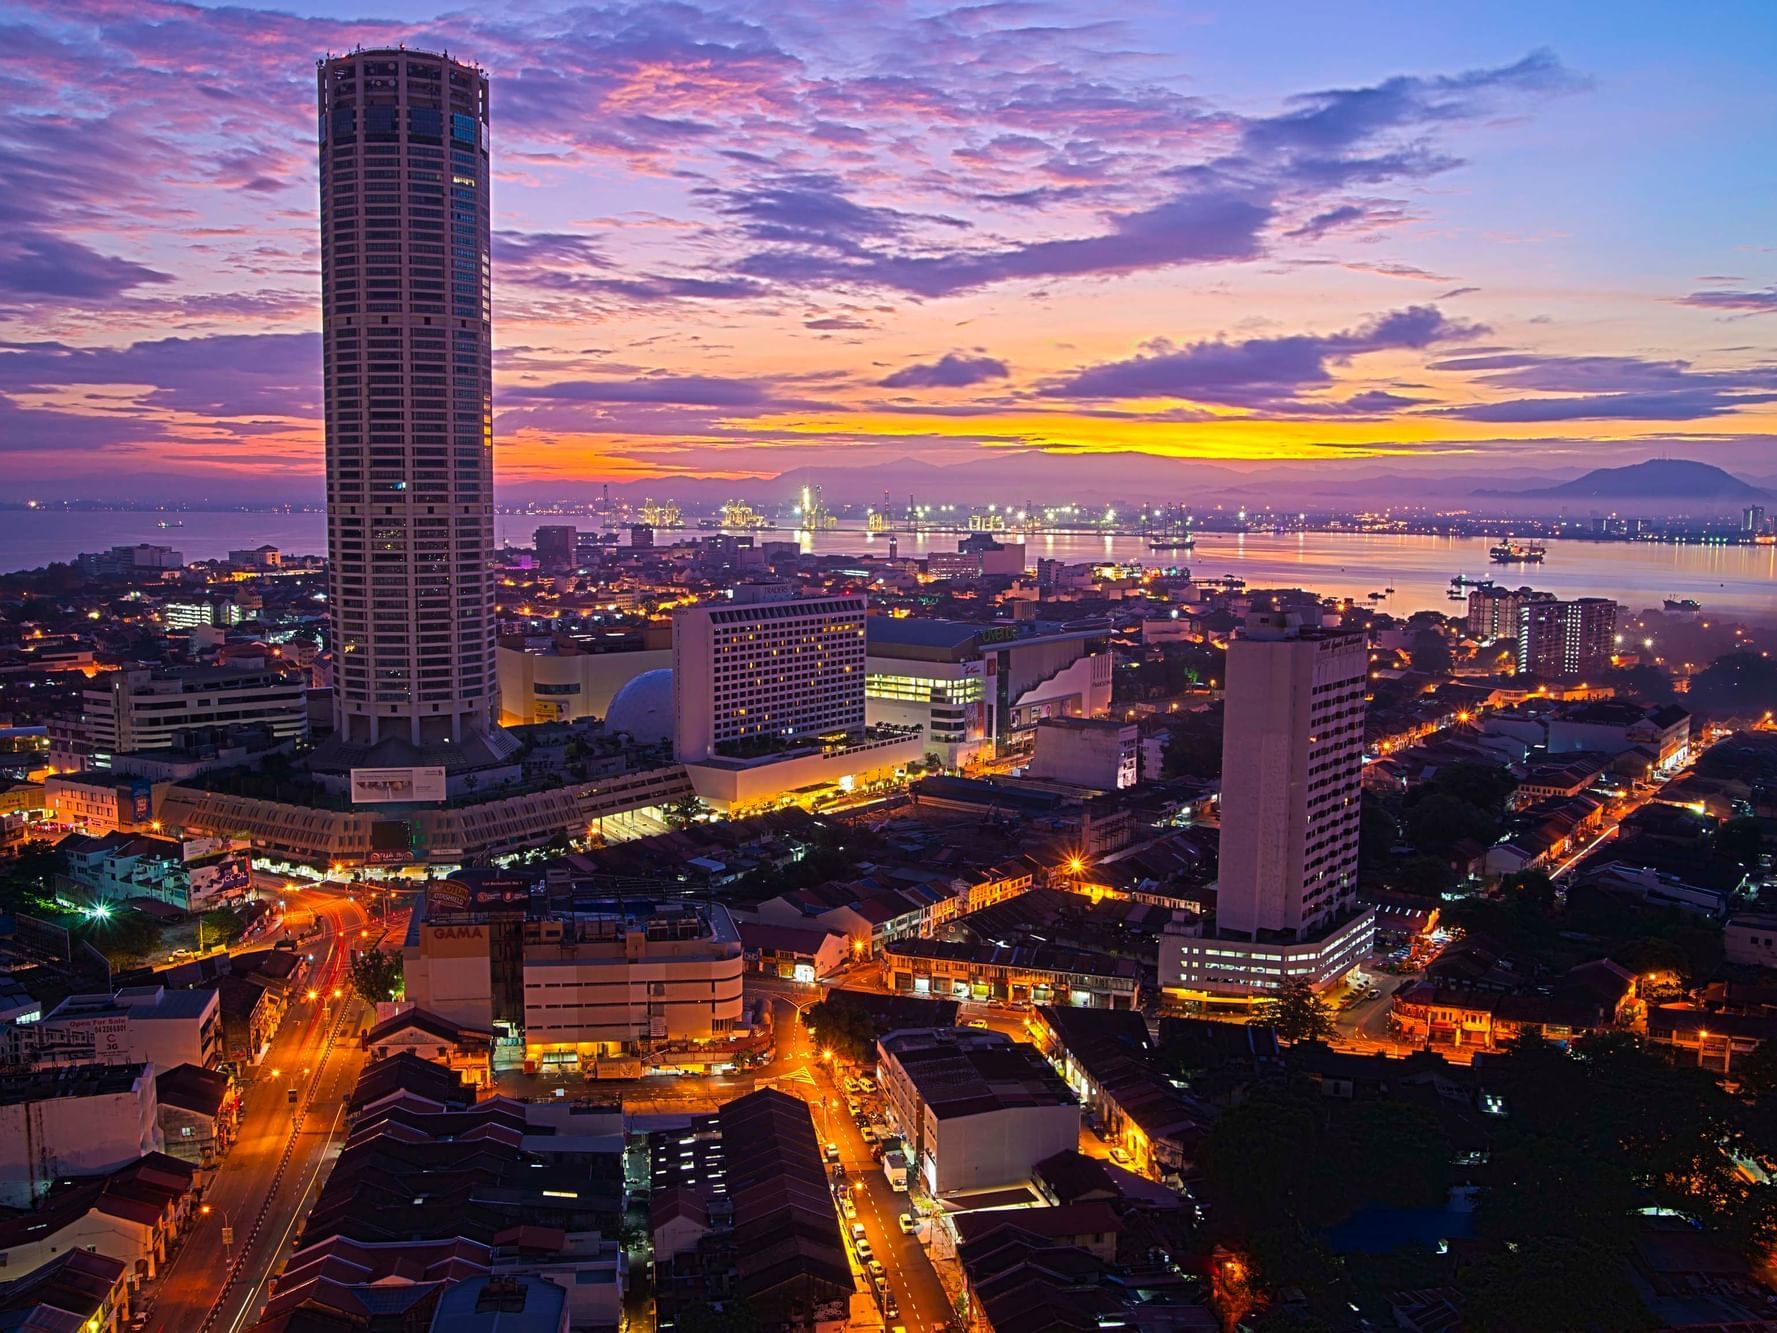 Cityscape of Komtar & Prangin Mall near Cititel Penang Hotel